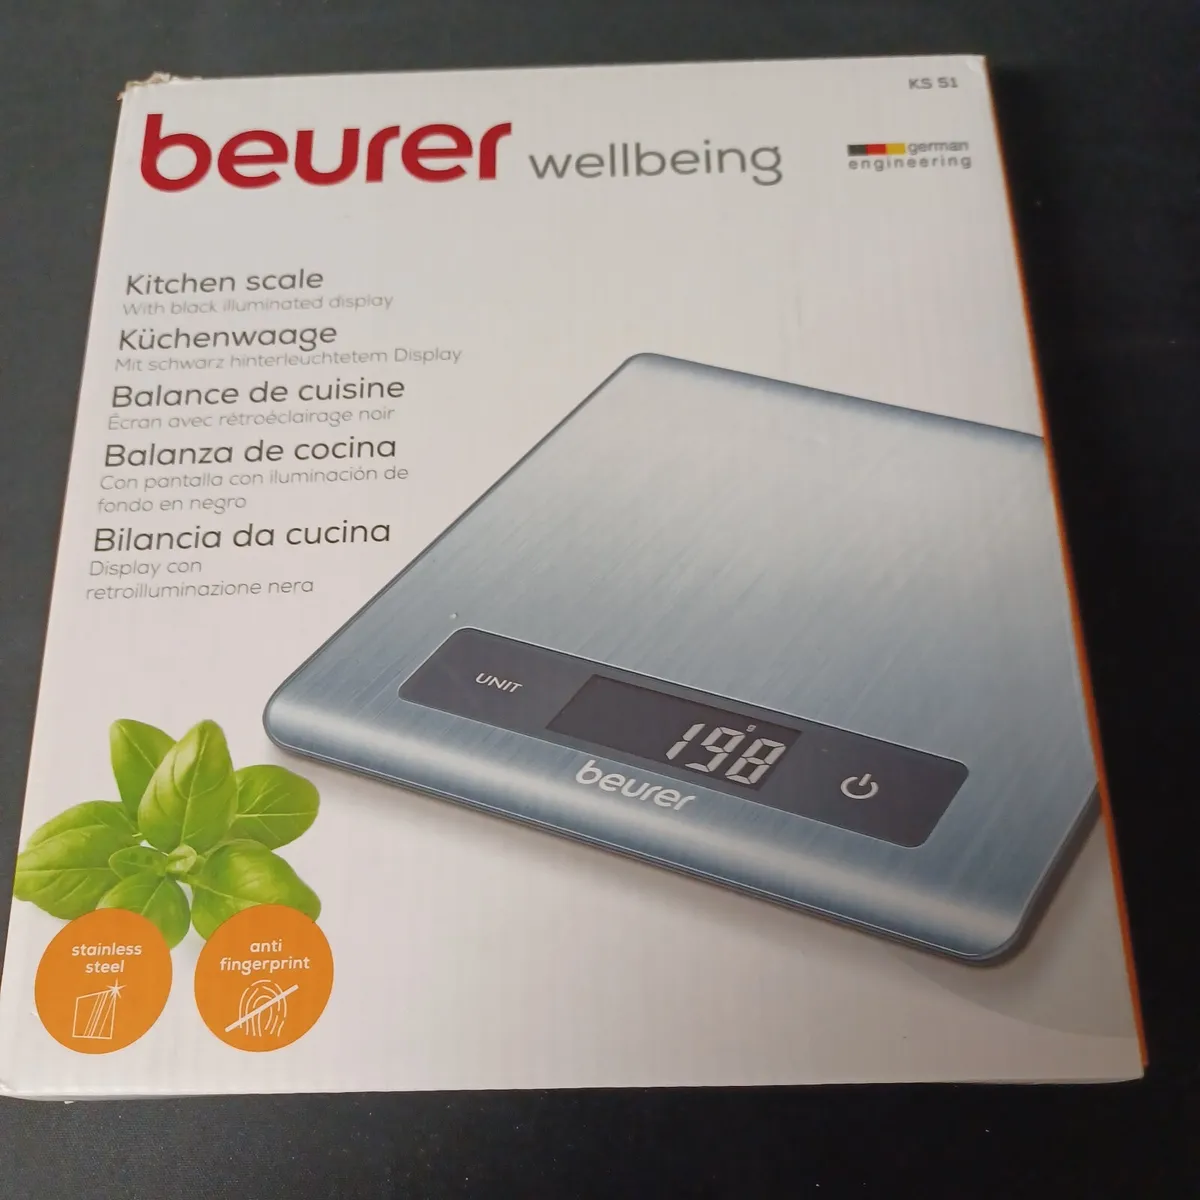 NIB, Beurer Well Being Digital Kitchen Scale, Food Scale, Teal KS 51 | eBay